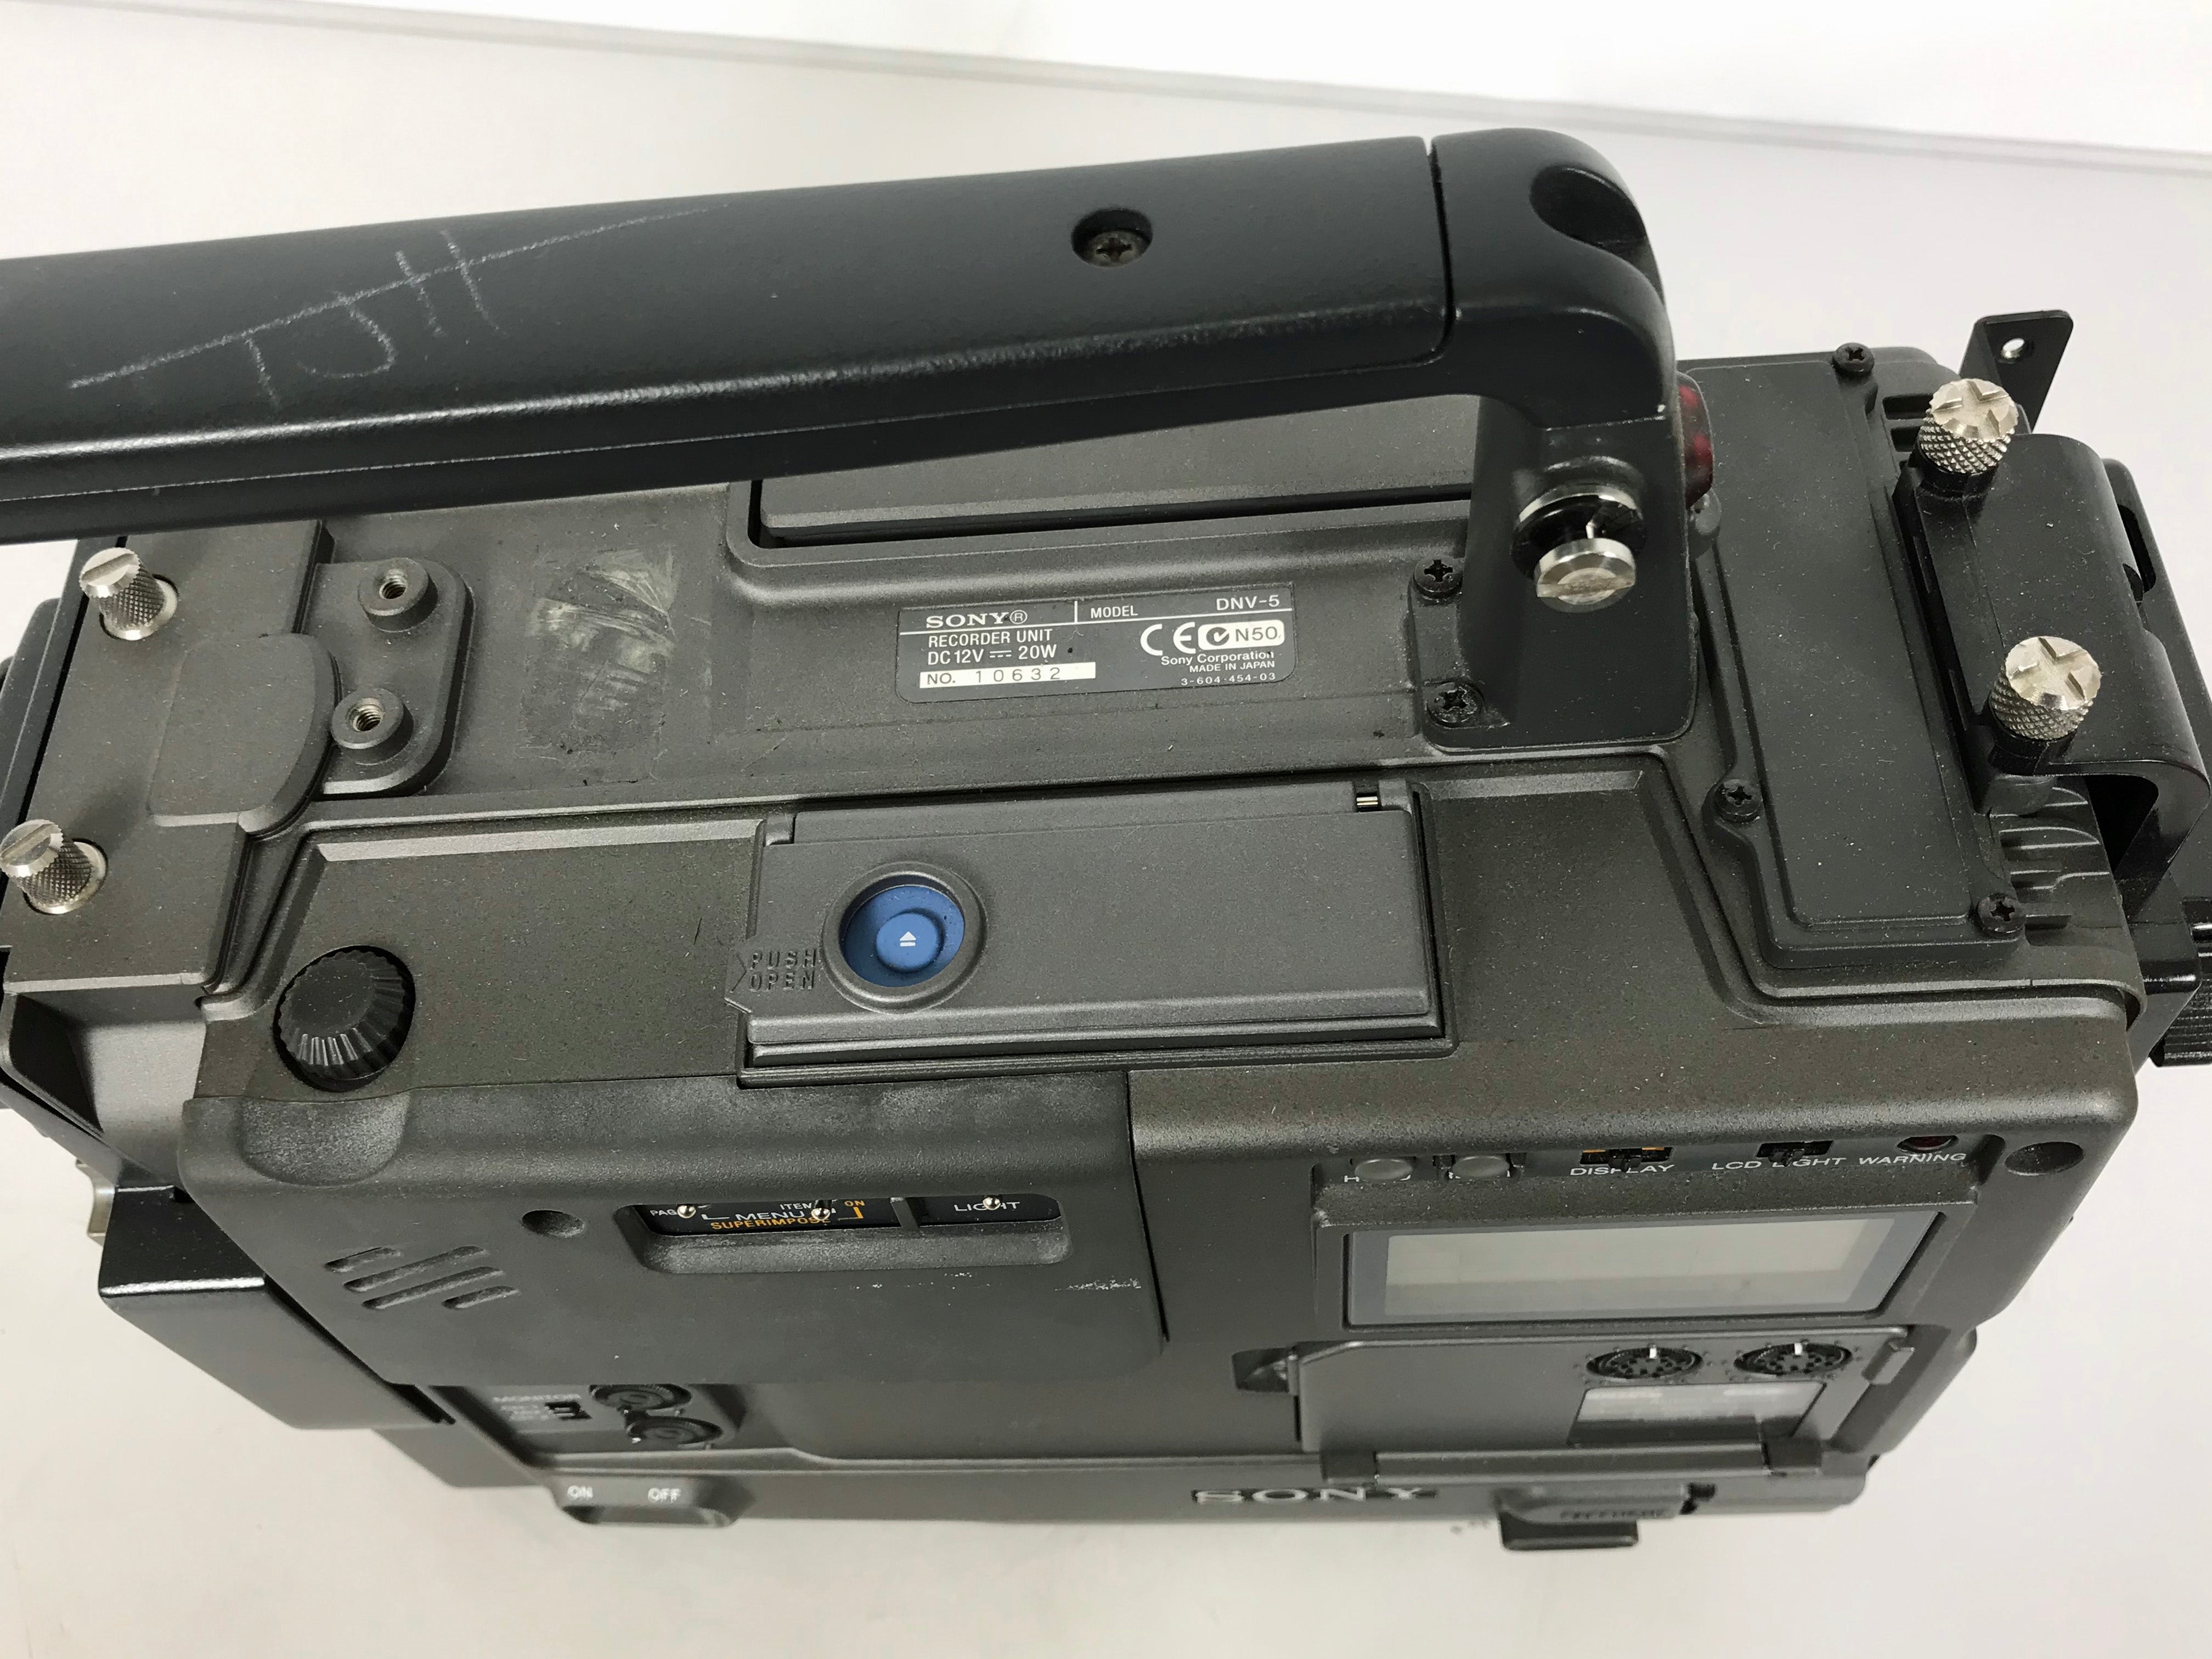 Sony DNV-5 Betacam SX Recorder Unit w/ Hitachi IM-Z3D Inner Module